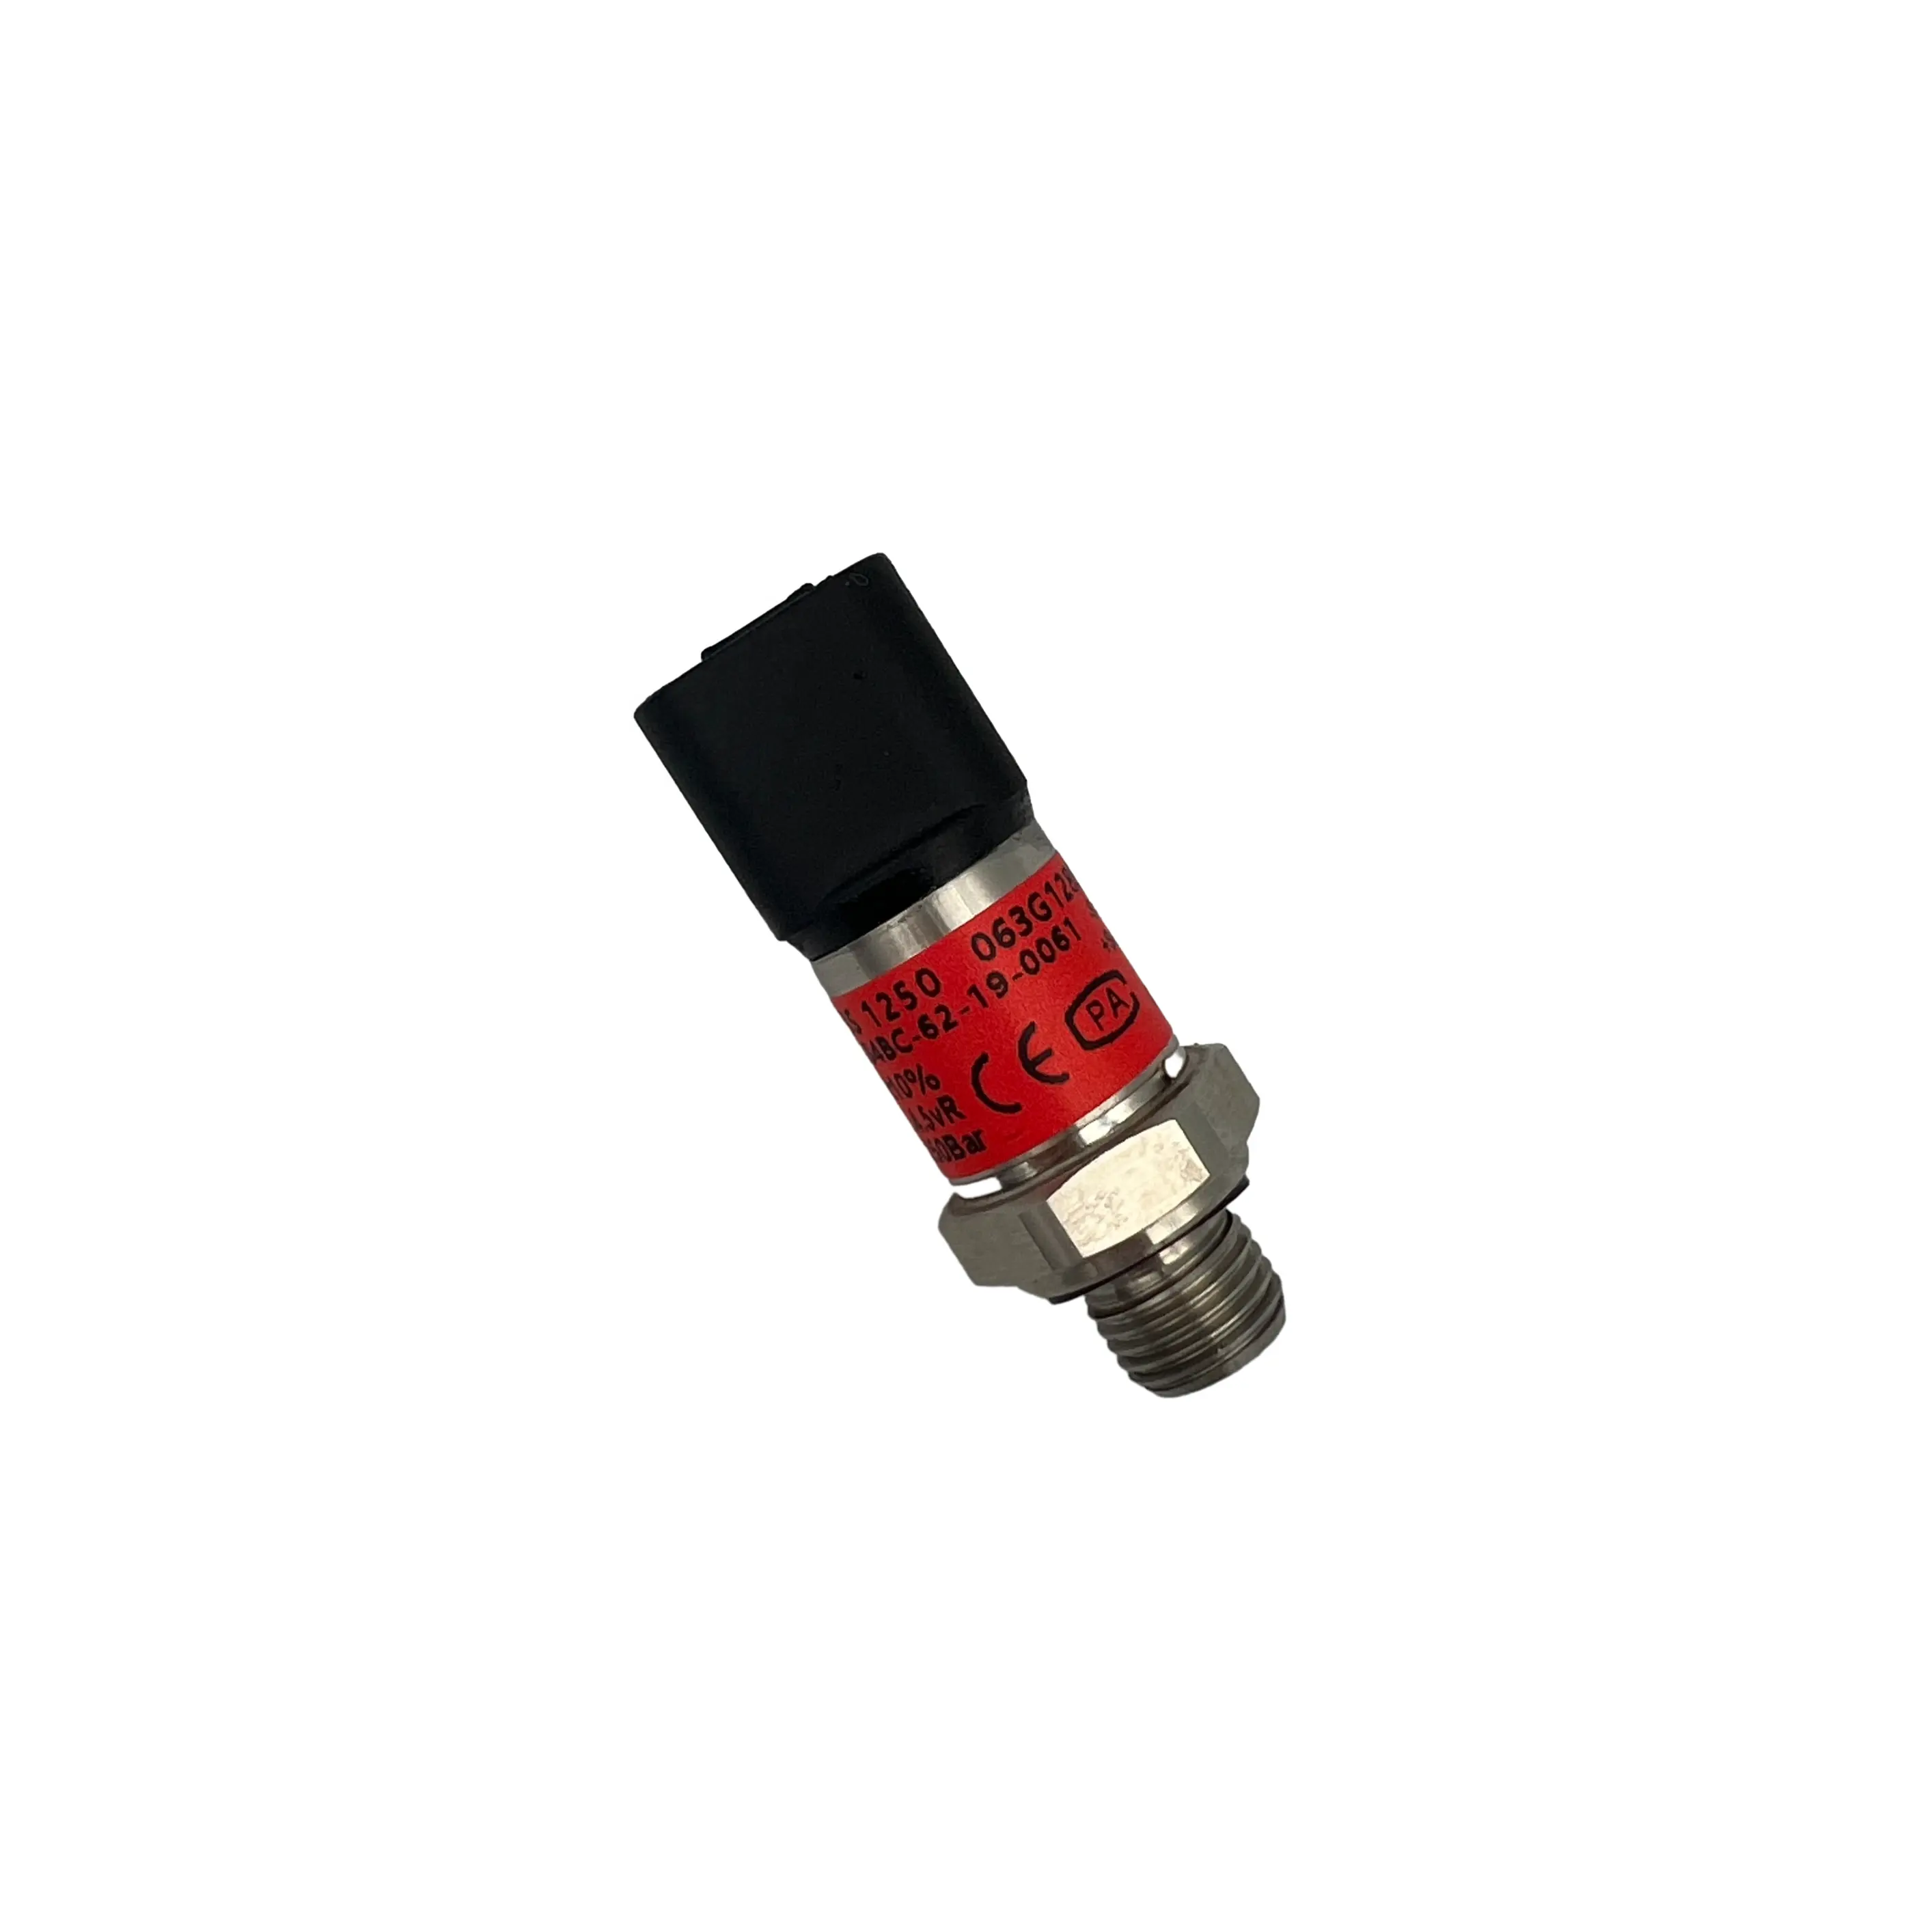 MBS1250 0-250bar 063 g1289 sensore di pressione 0.5-4.5VR